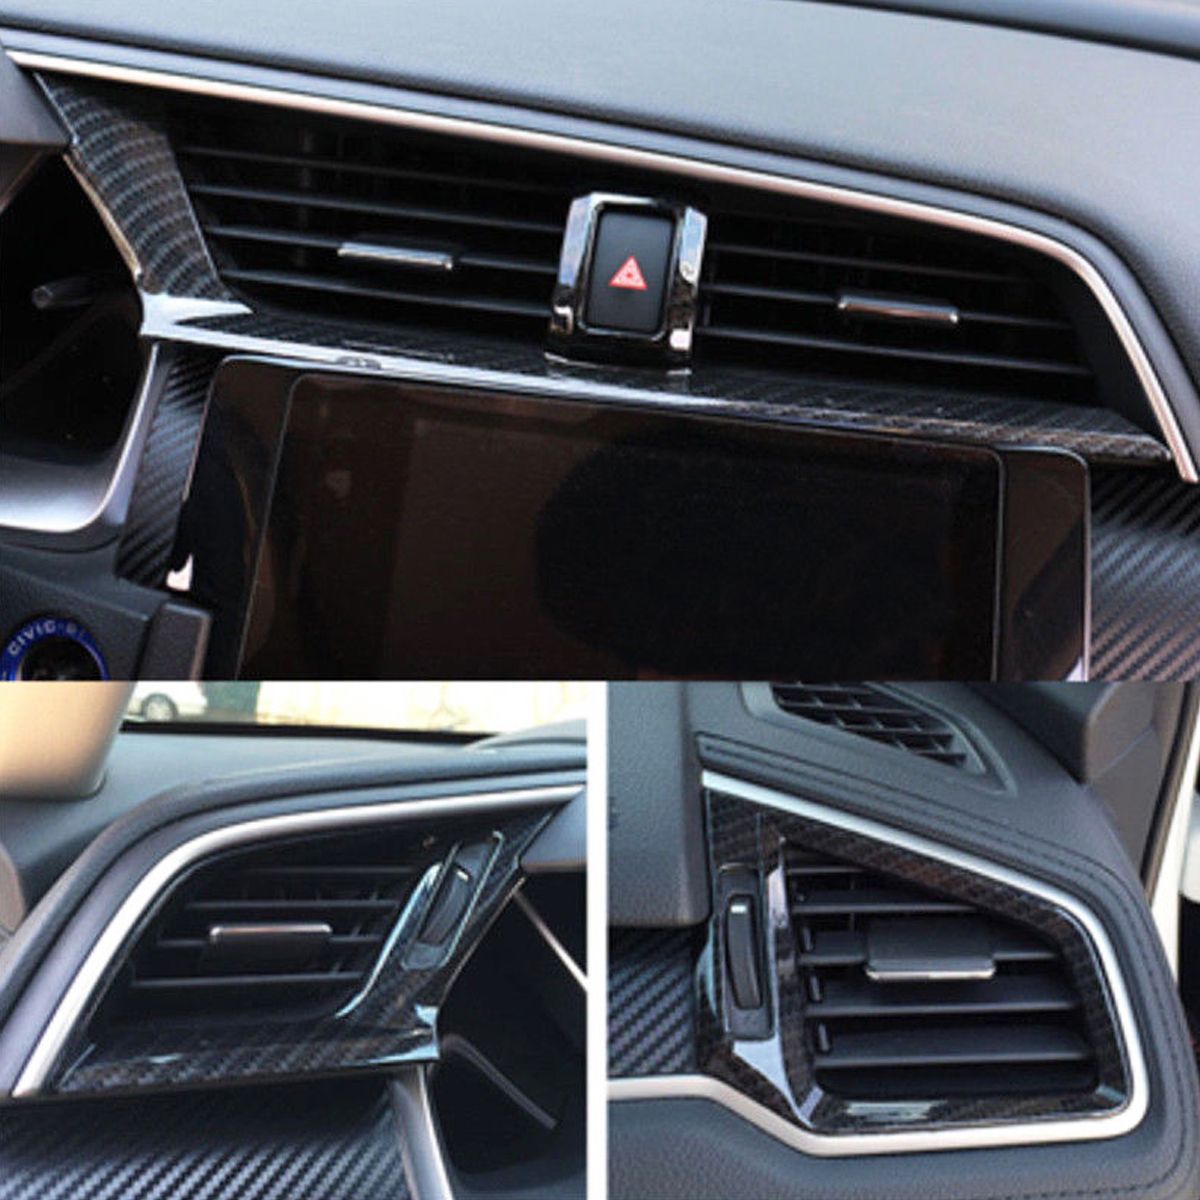 7Pcs-Carbon-Fiber-Dashboard-Look-Gear-Side-Cover-Trim-for-2016-2017-10th-Honda-Civic-1751649